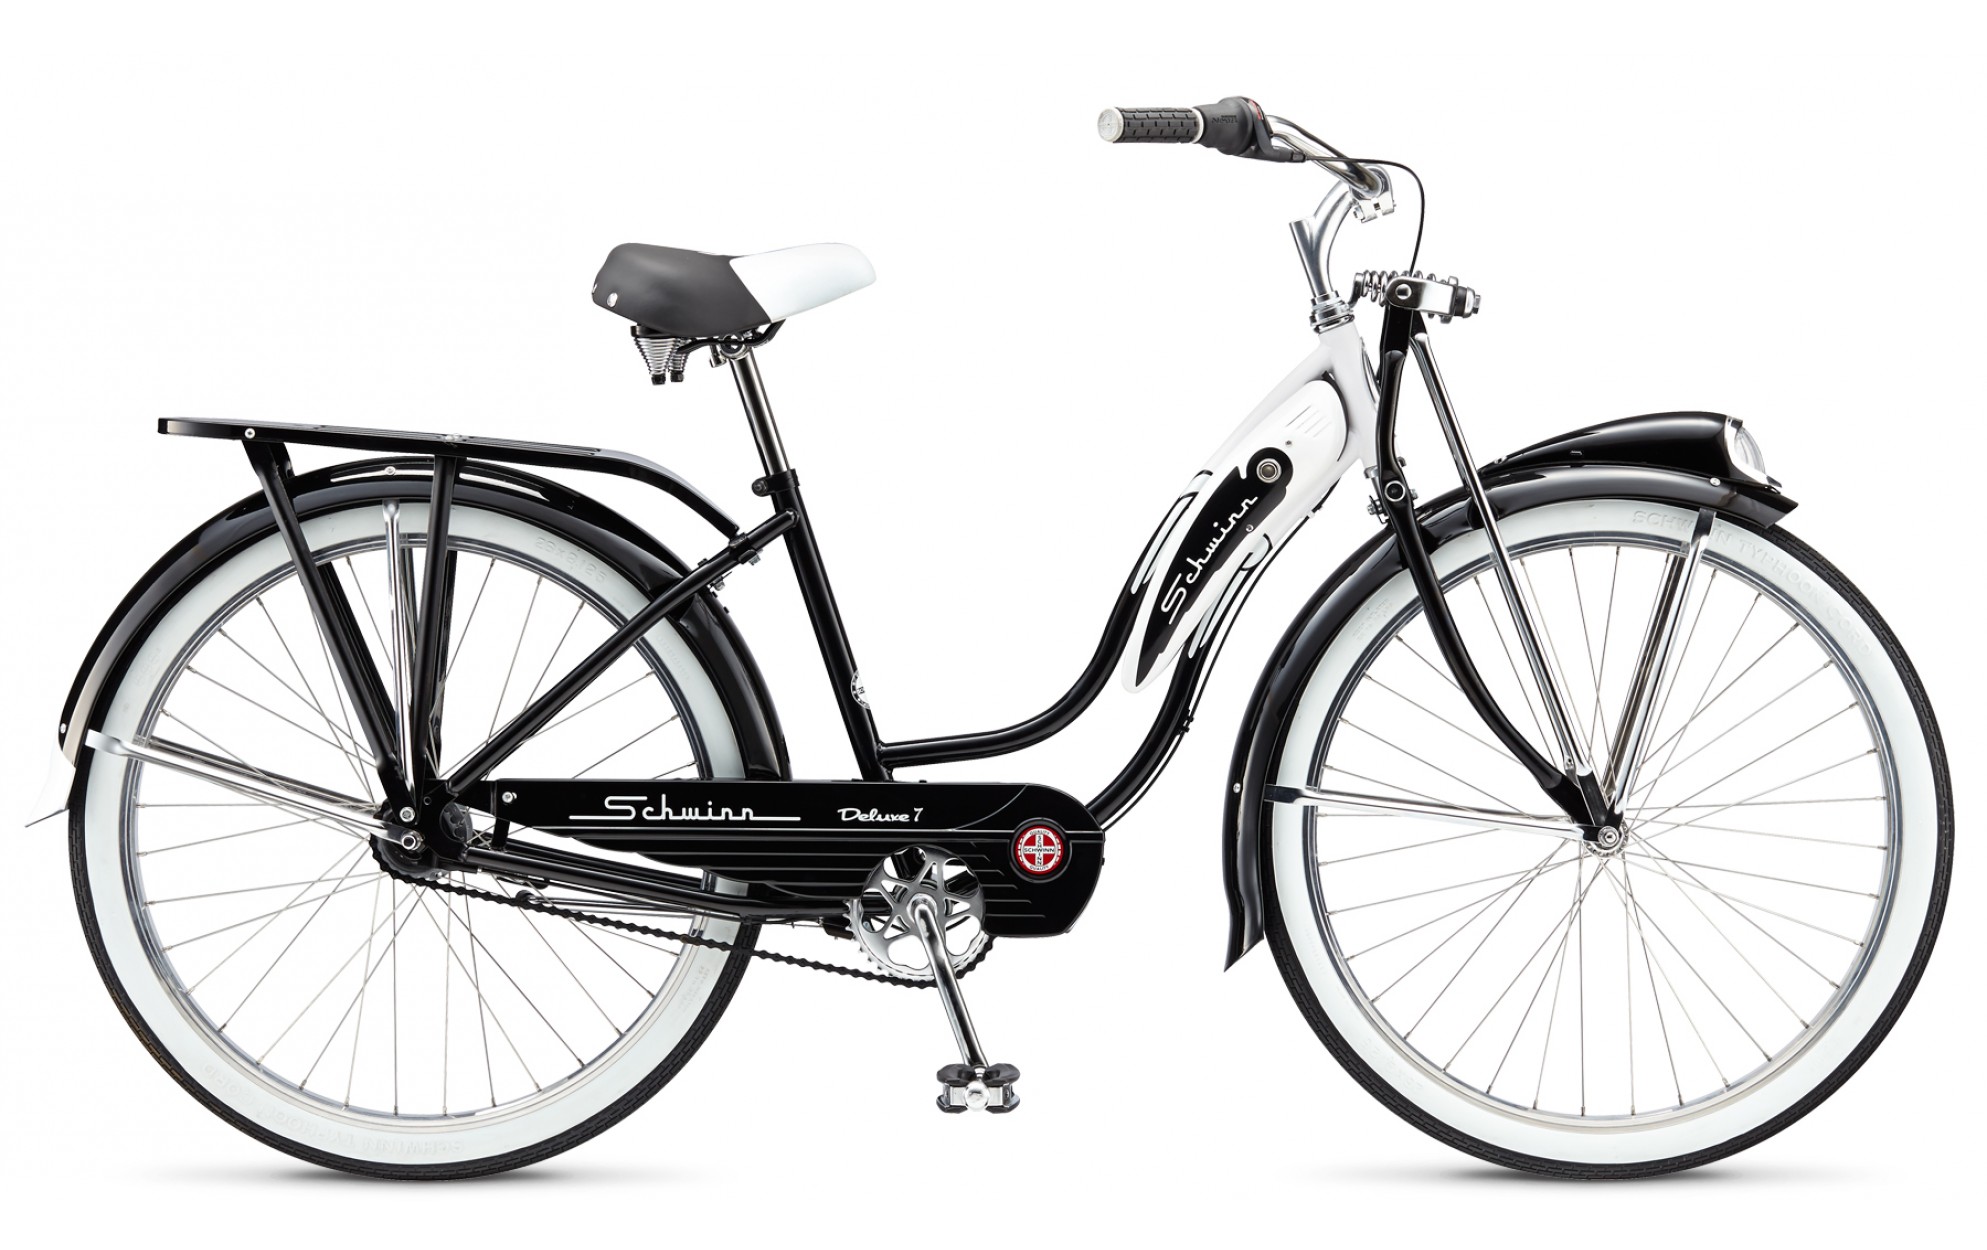 Велосипед 26" Schwinn Classic Deluxe 7 thru step frame black 2015 фото 